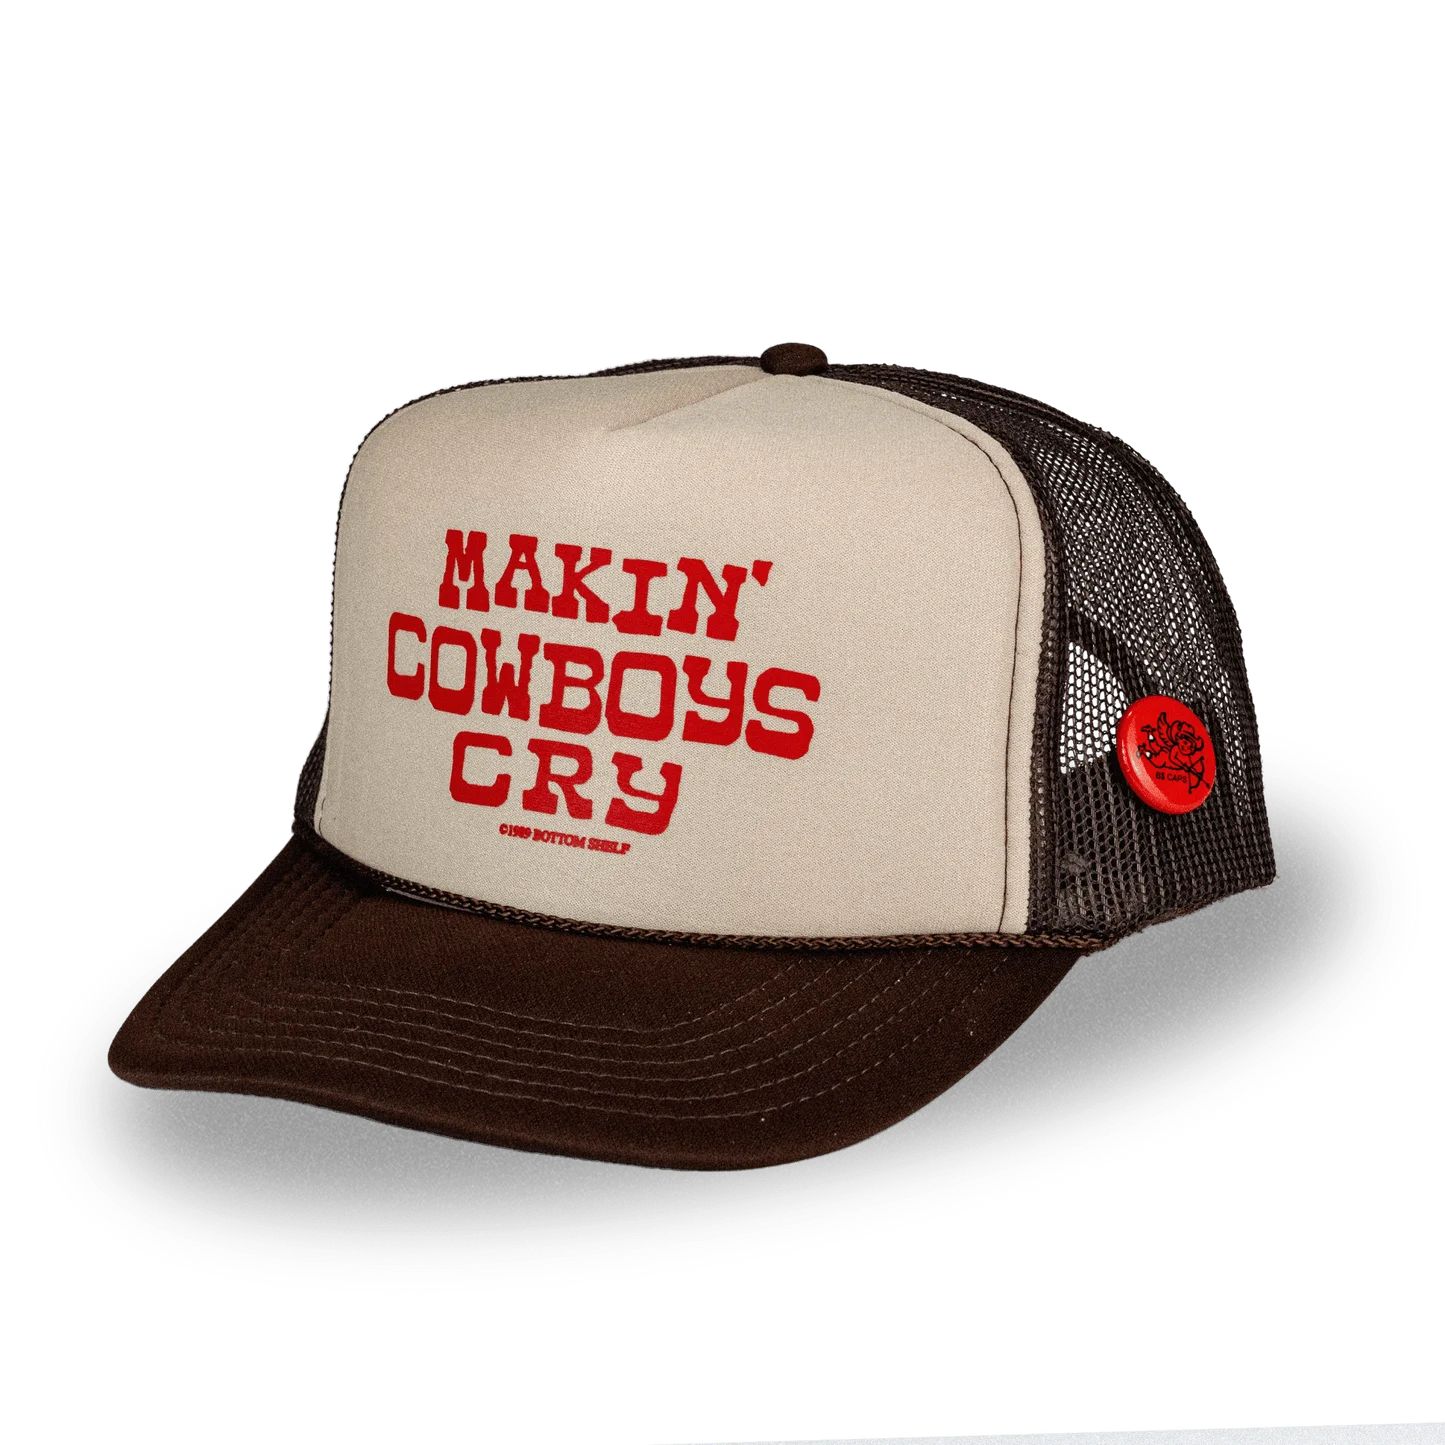 Makin' Cowboys Cry Trucker Hat - Premium High Quality Snapback Cap for Men and Women (Brown/Tan) | Walmart (US)